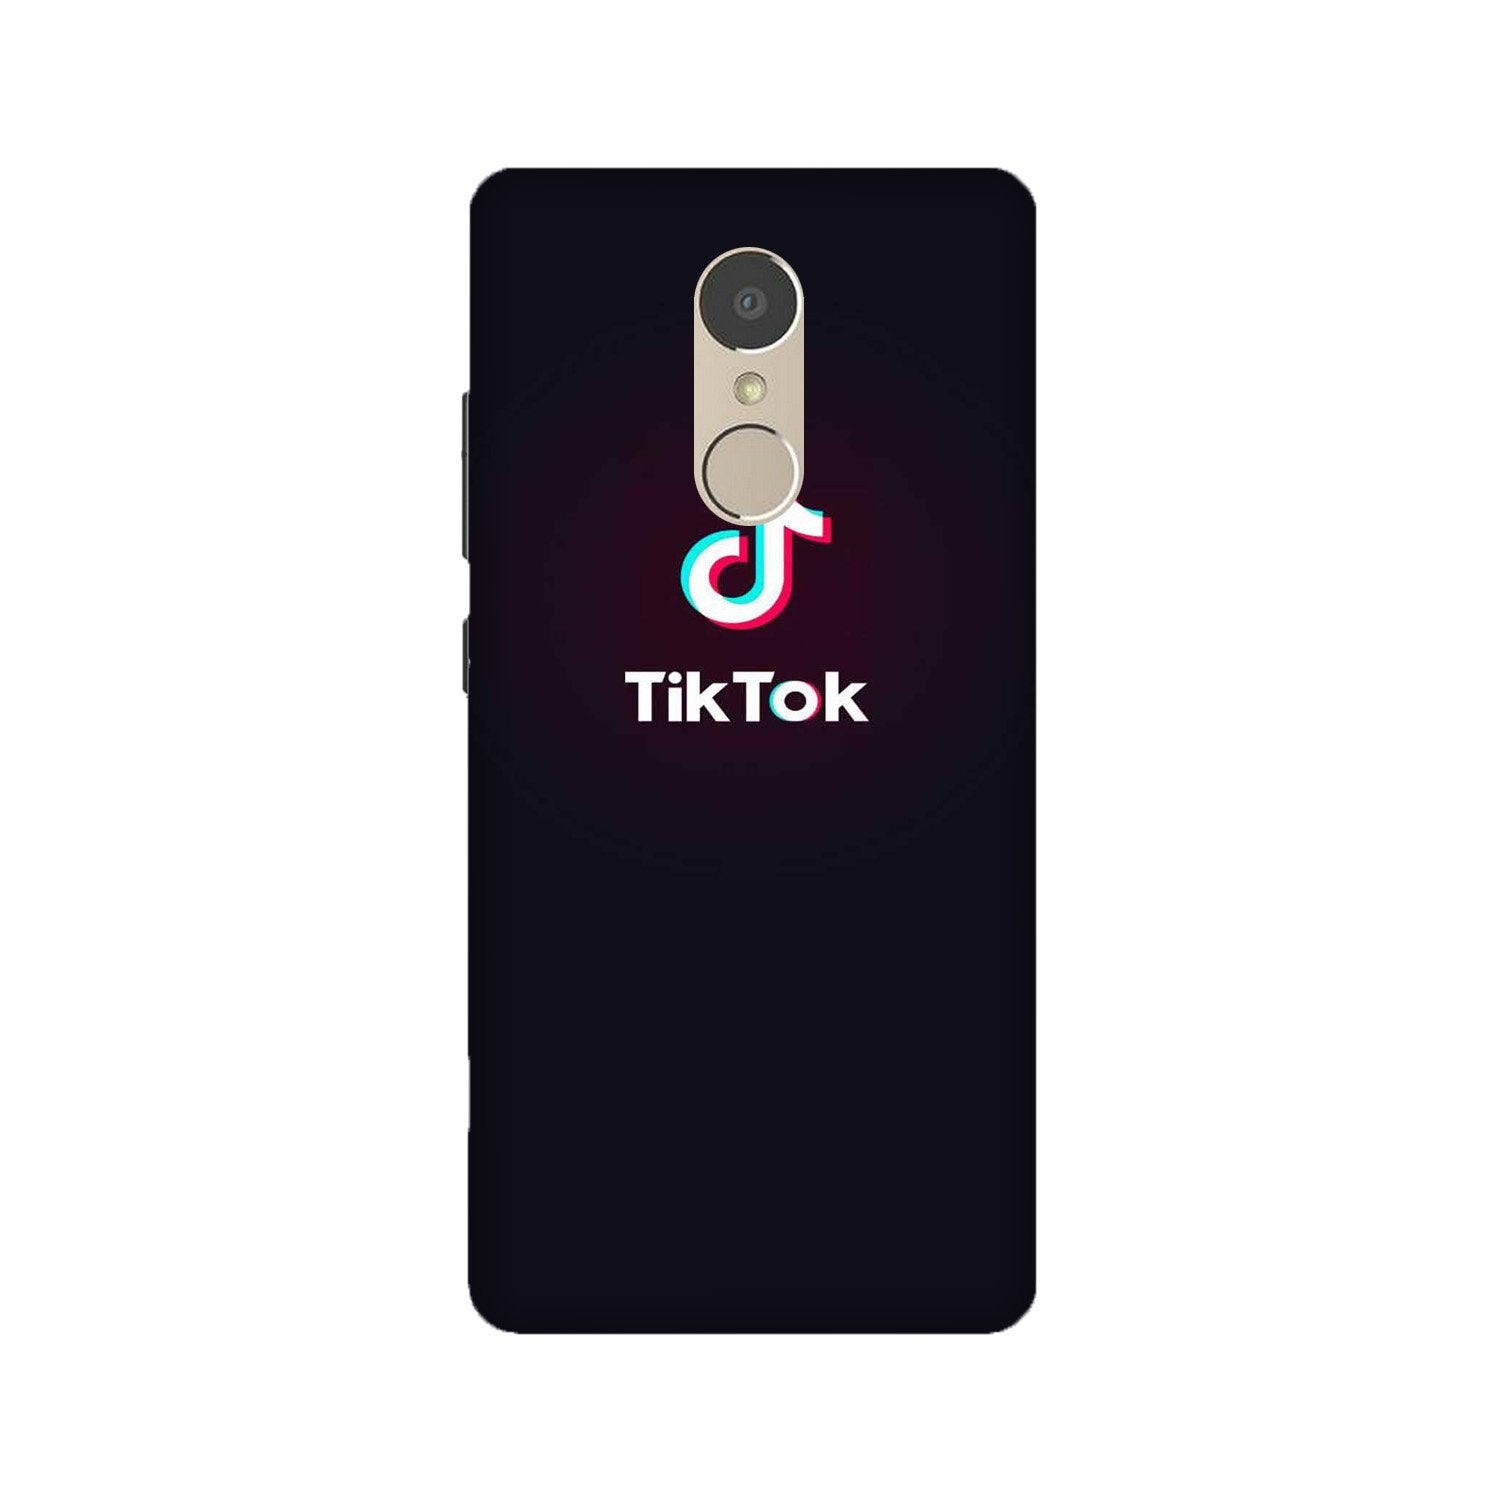 Tiktok Mobile Back Case for Lenovo K6 Note (Design - 396)